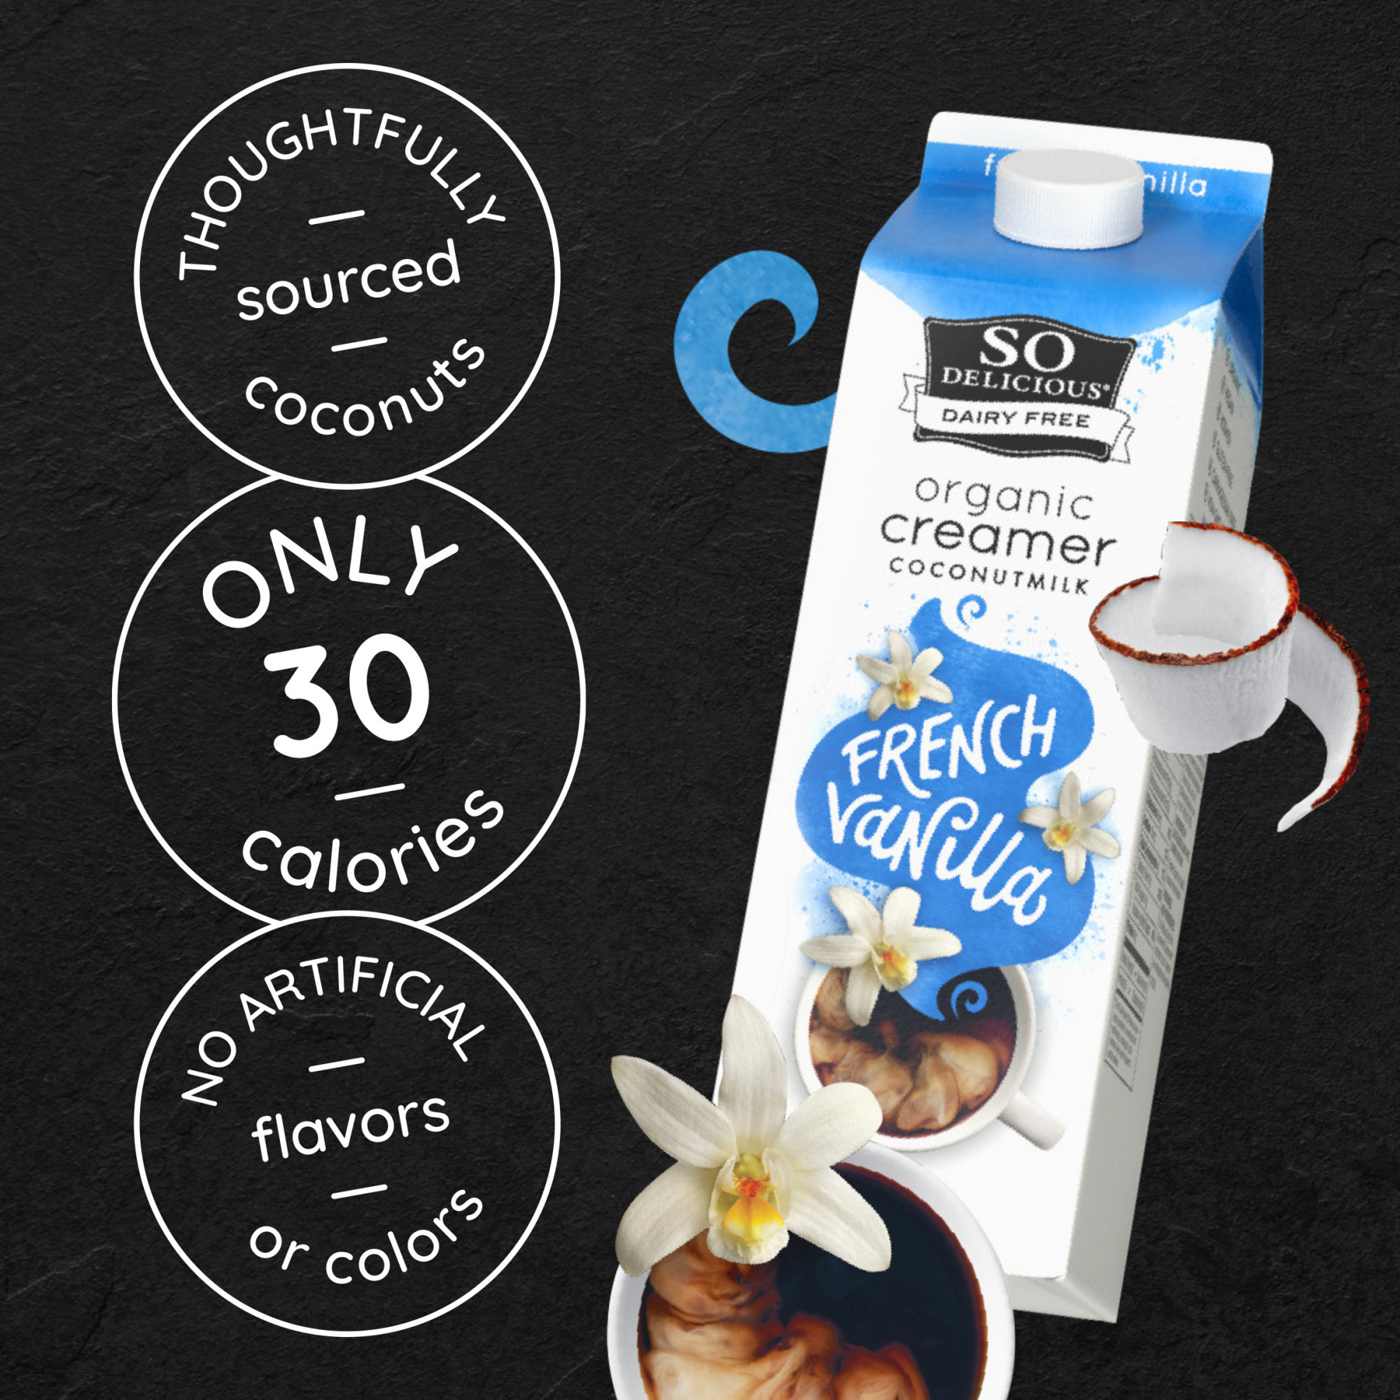 So Delicious Dairy Free Organic French Vanilla Coconutmilk Creamer; image 6 of 7